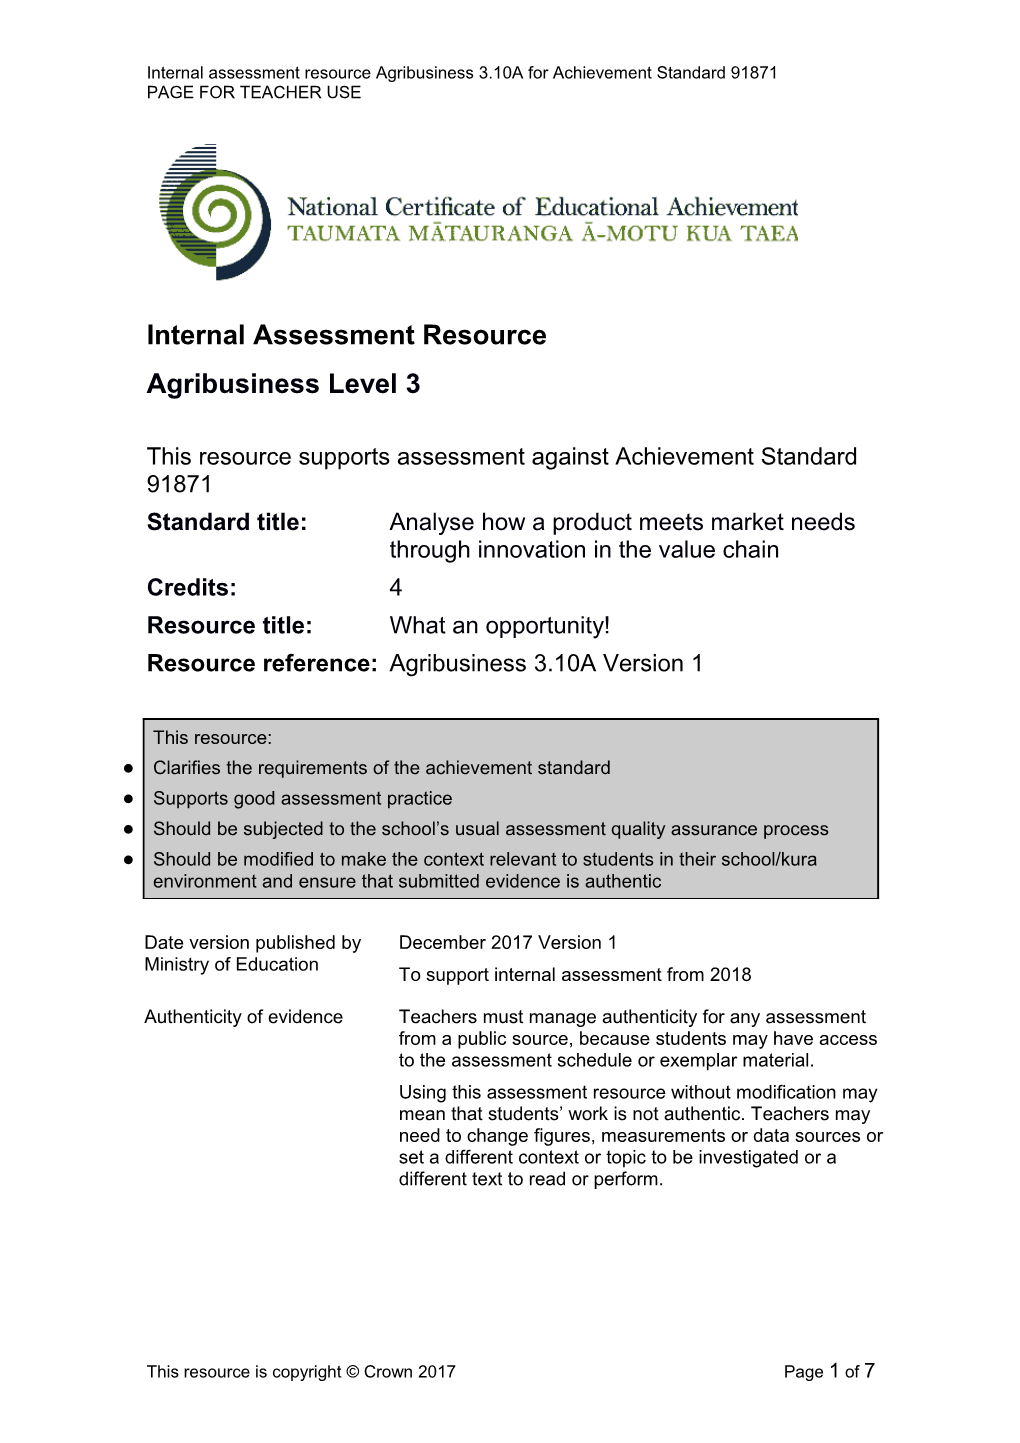 Internal Assessment Resource Agribusiness Level 3